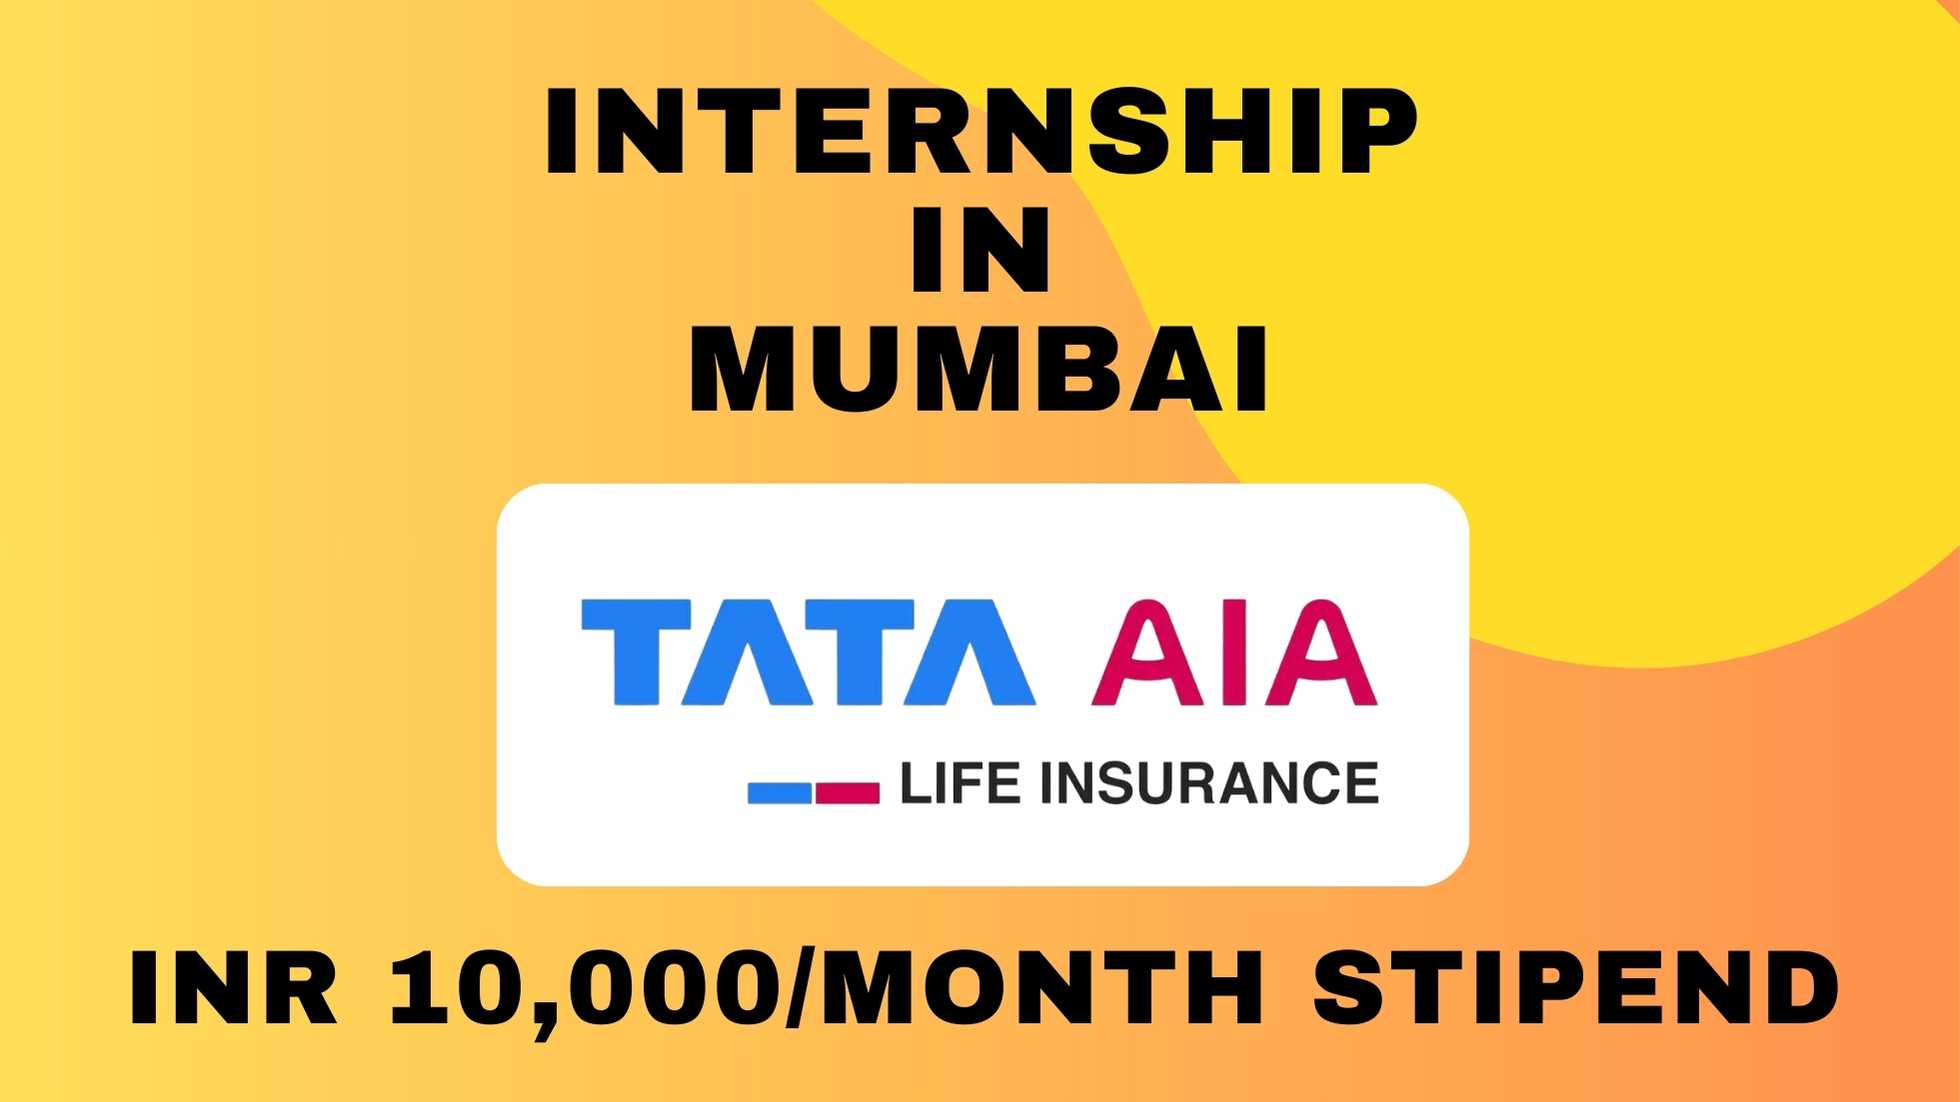 Tata AIA Life Insurance Internship in Mumbai